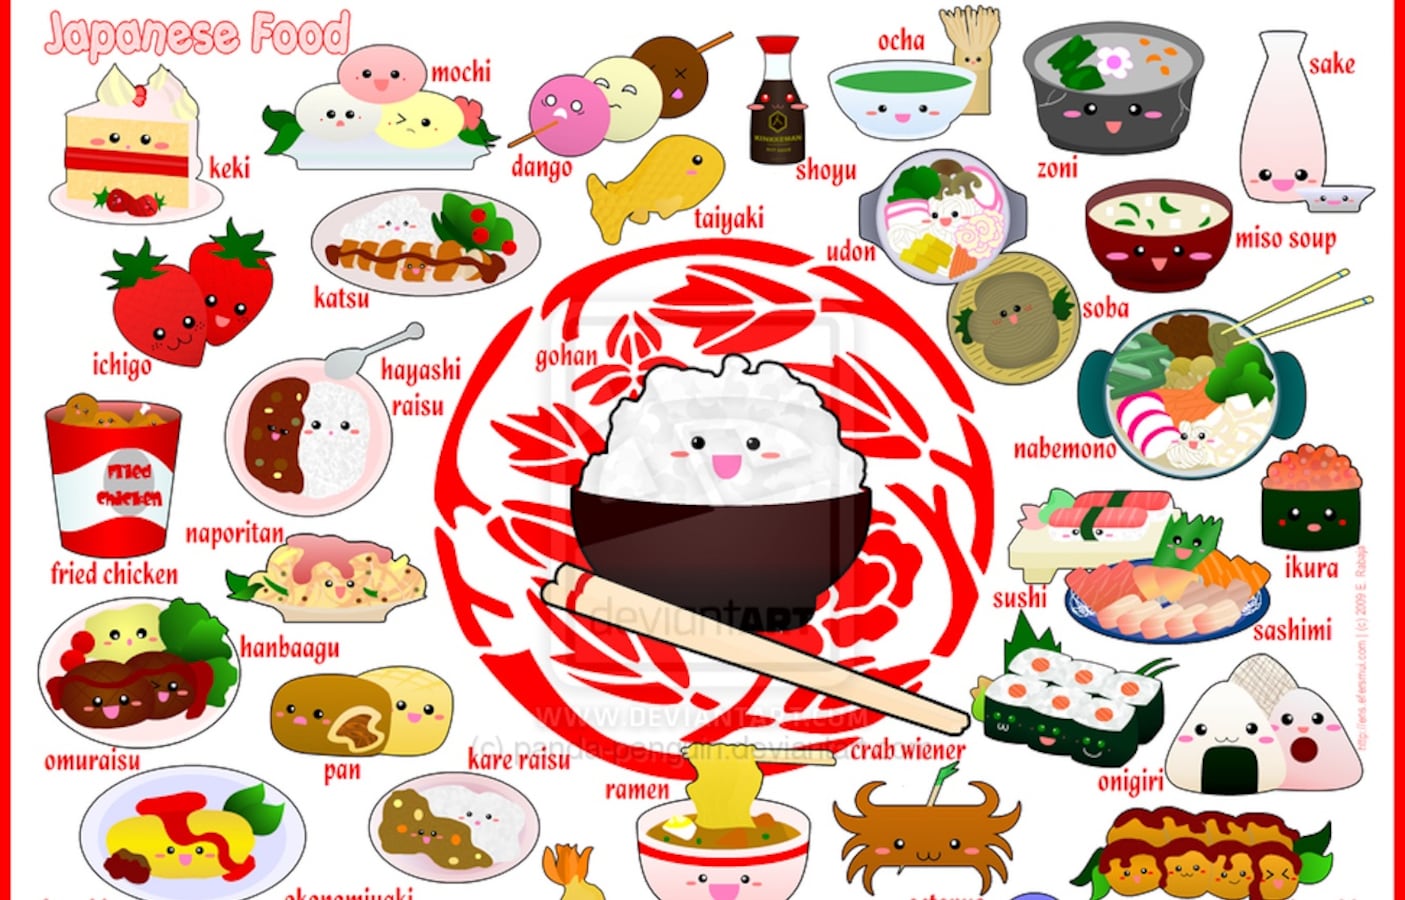 Названия блюд на английском. Японские блюда названия. Японская еда рисунки. Японские блюда на английском. Японские блюда иллюстрации с названиями.